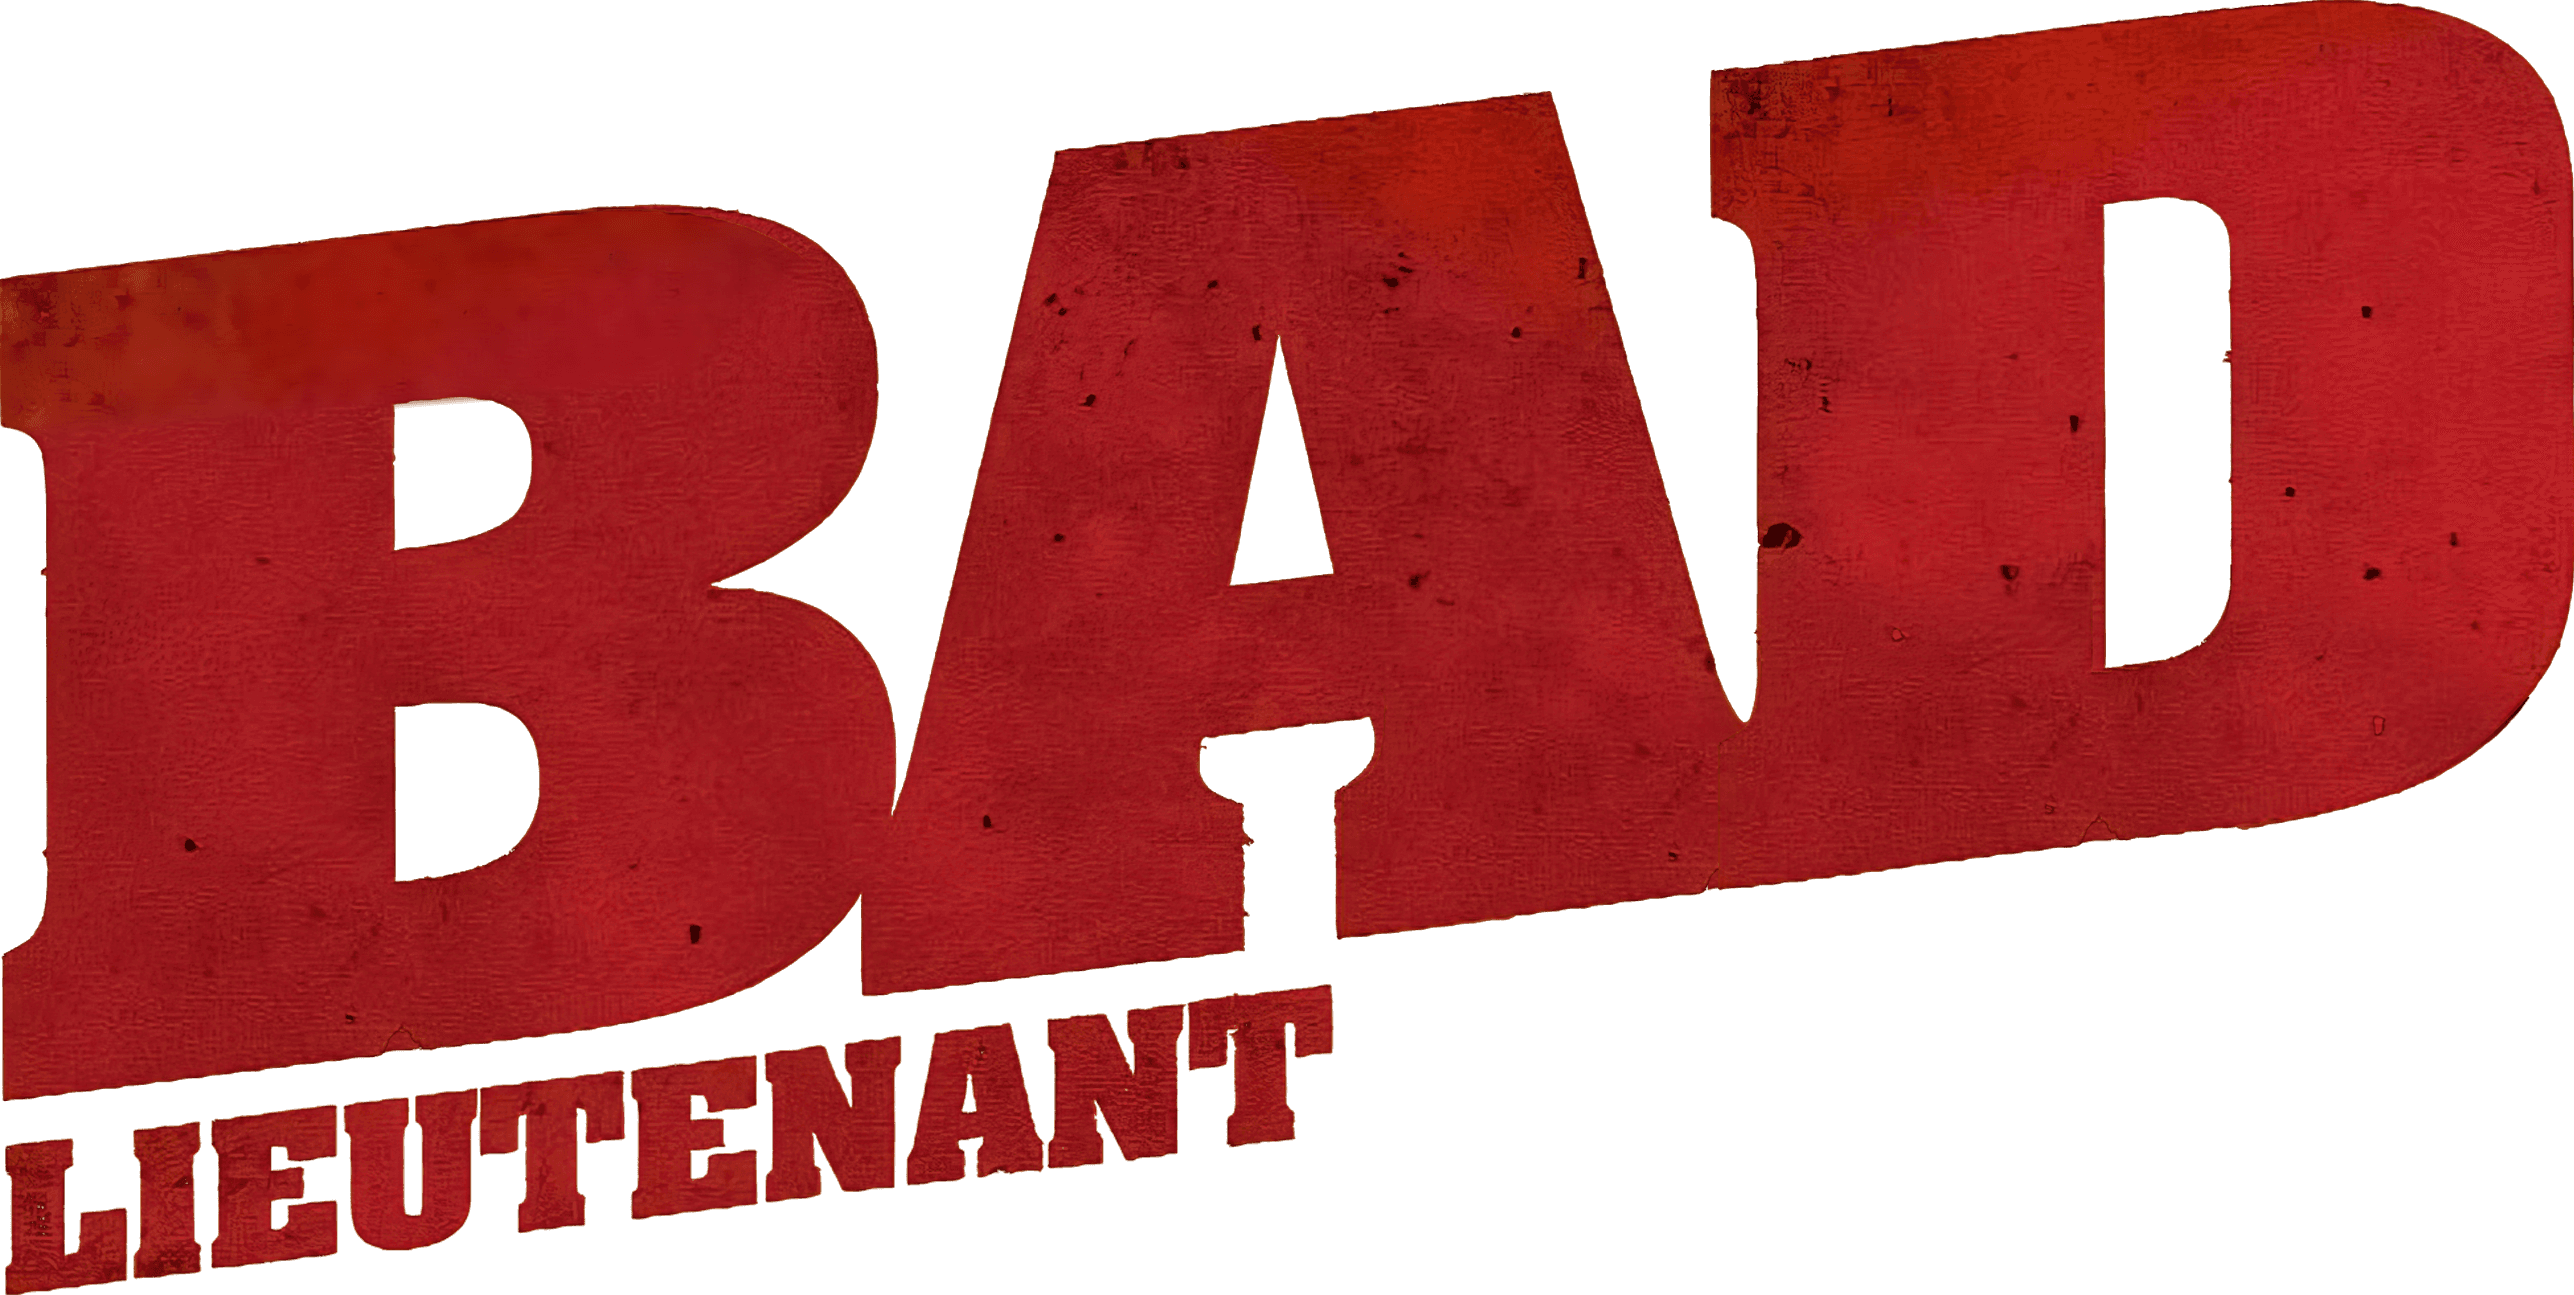 Bad Lieutenant logo